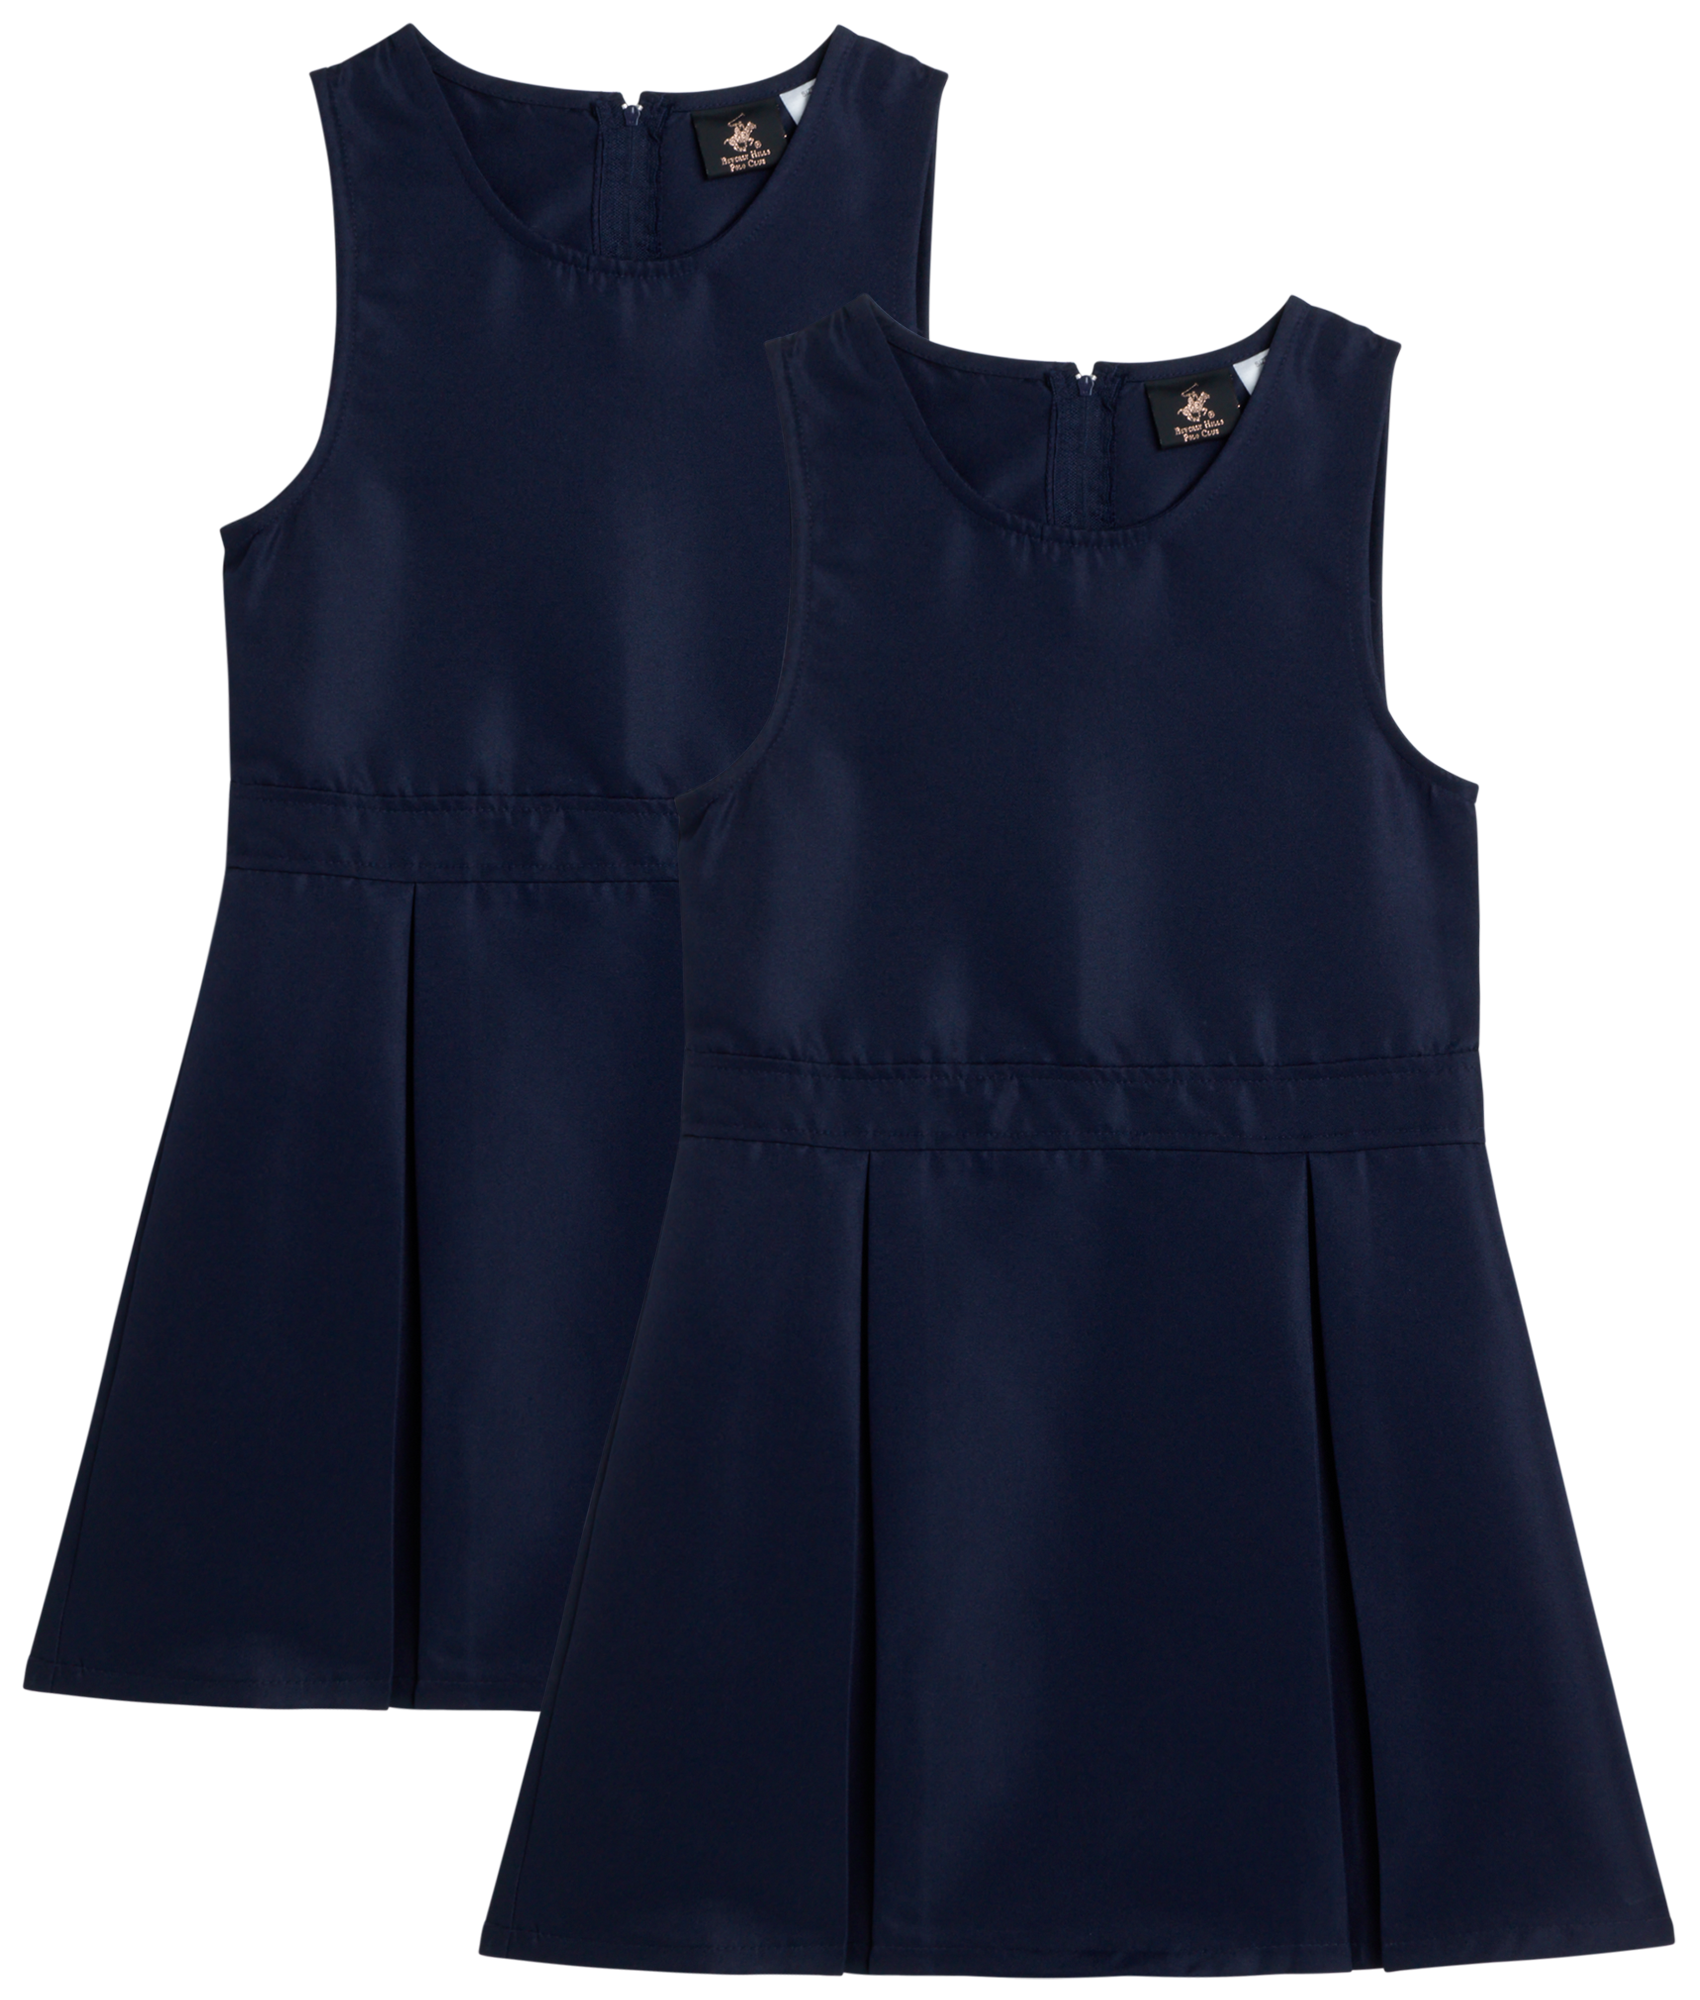 Beverly Hills Polo Club Girls' School Uniform Dress - 2 Pack Sleeveless Pleated Khaki Jumper Dress (4-16)